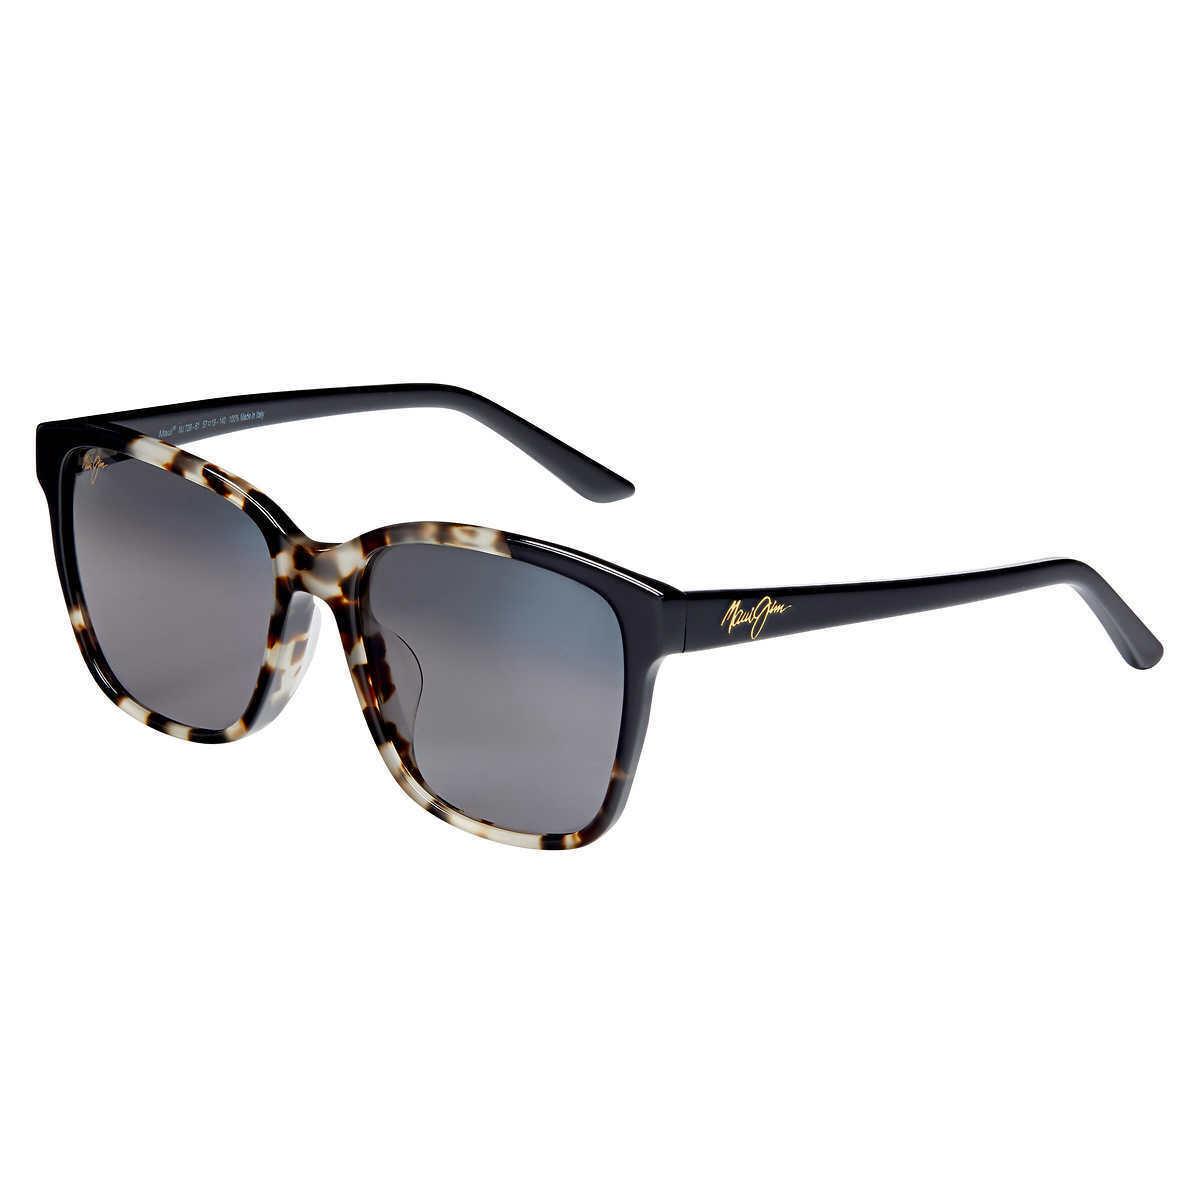 Maui Jim Moonbow 726-61 White Tokyo Gloss Black Sunglasses Polarized Gray Lenses